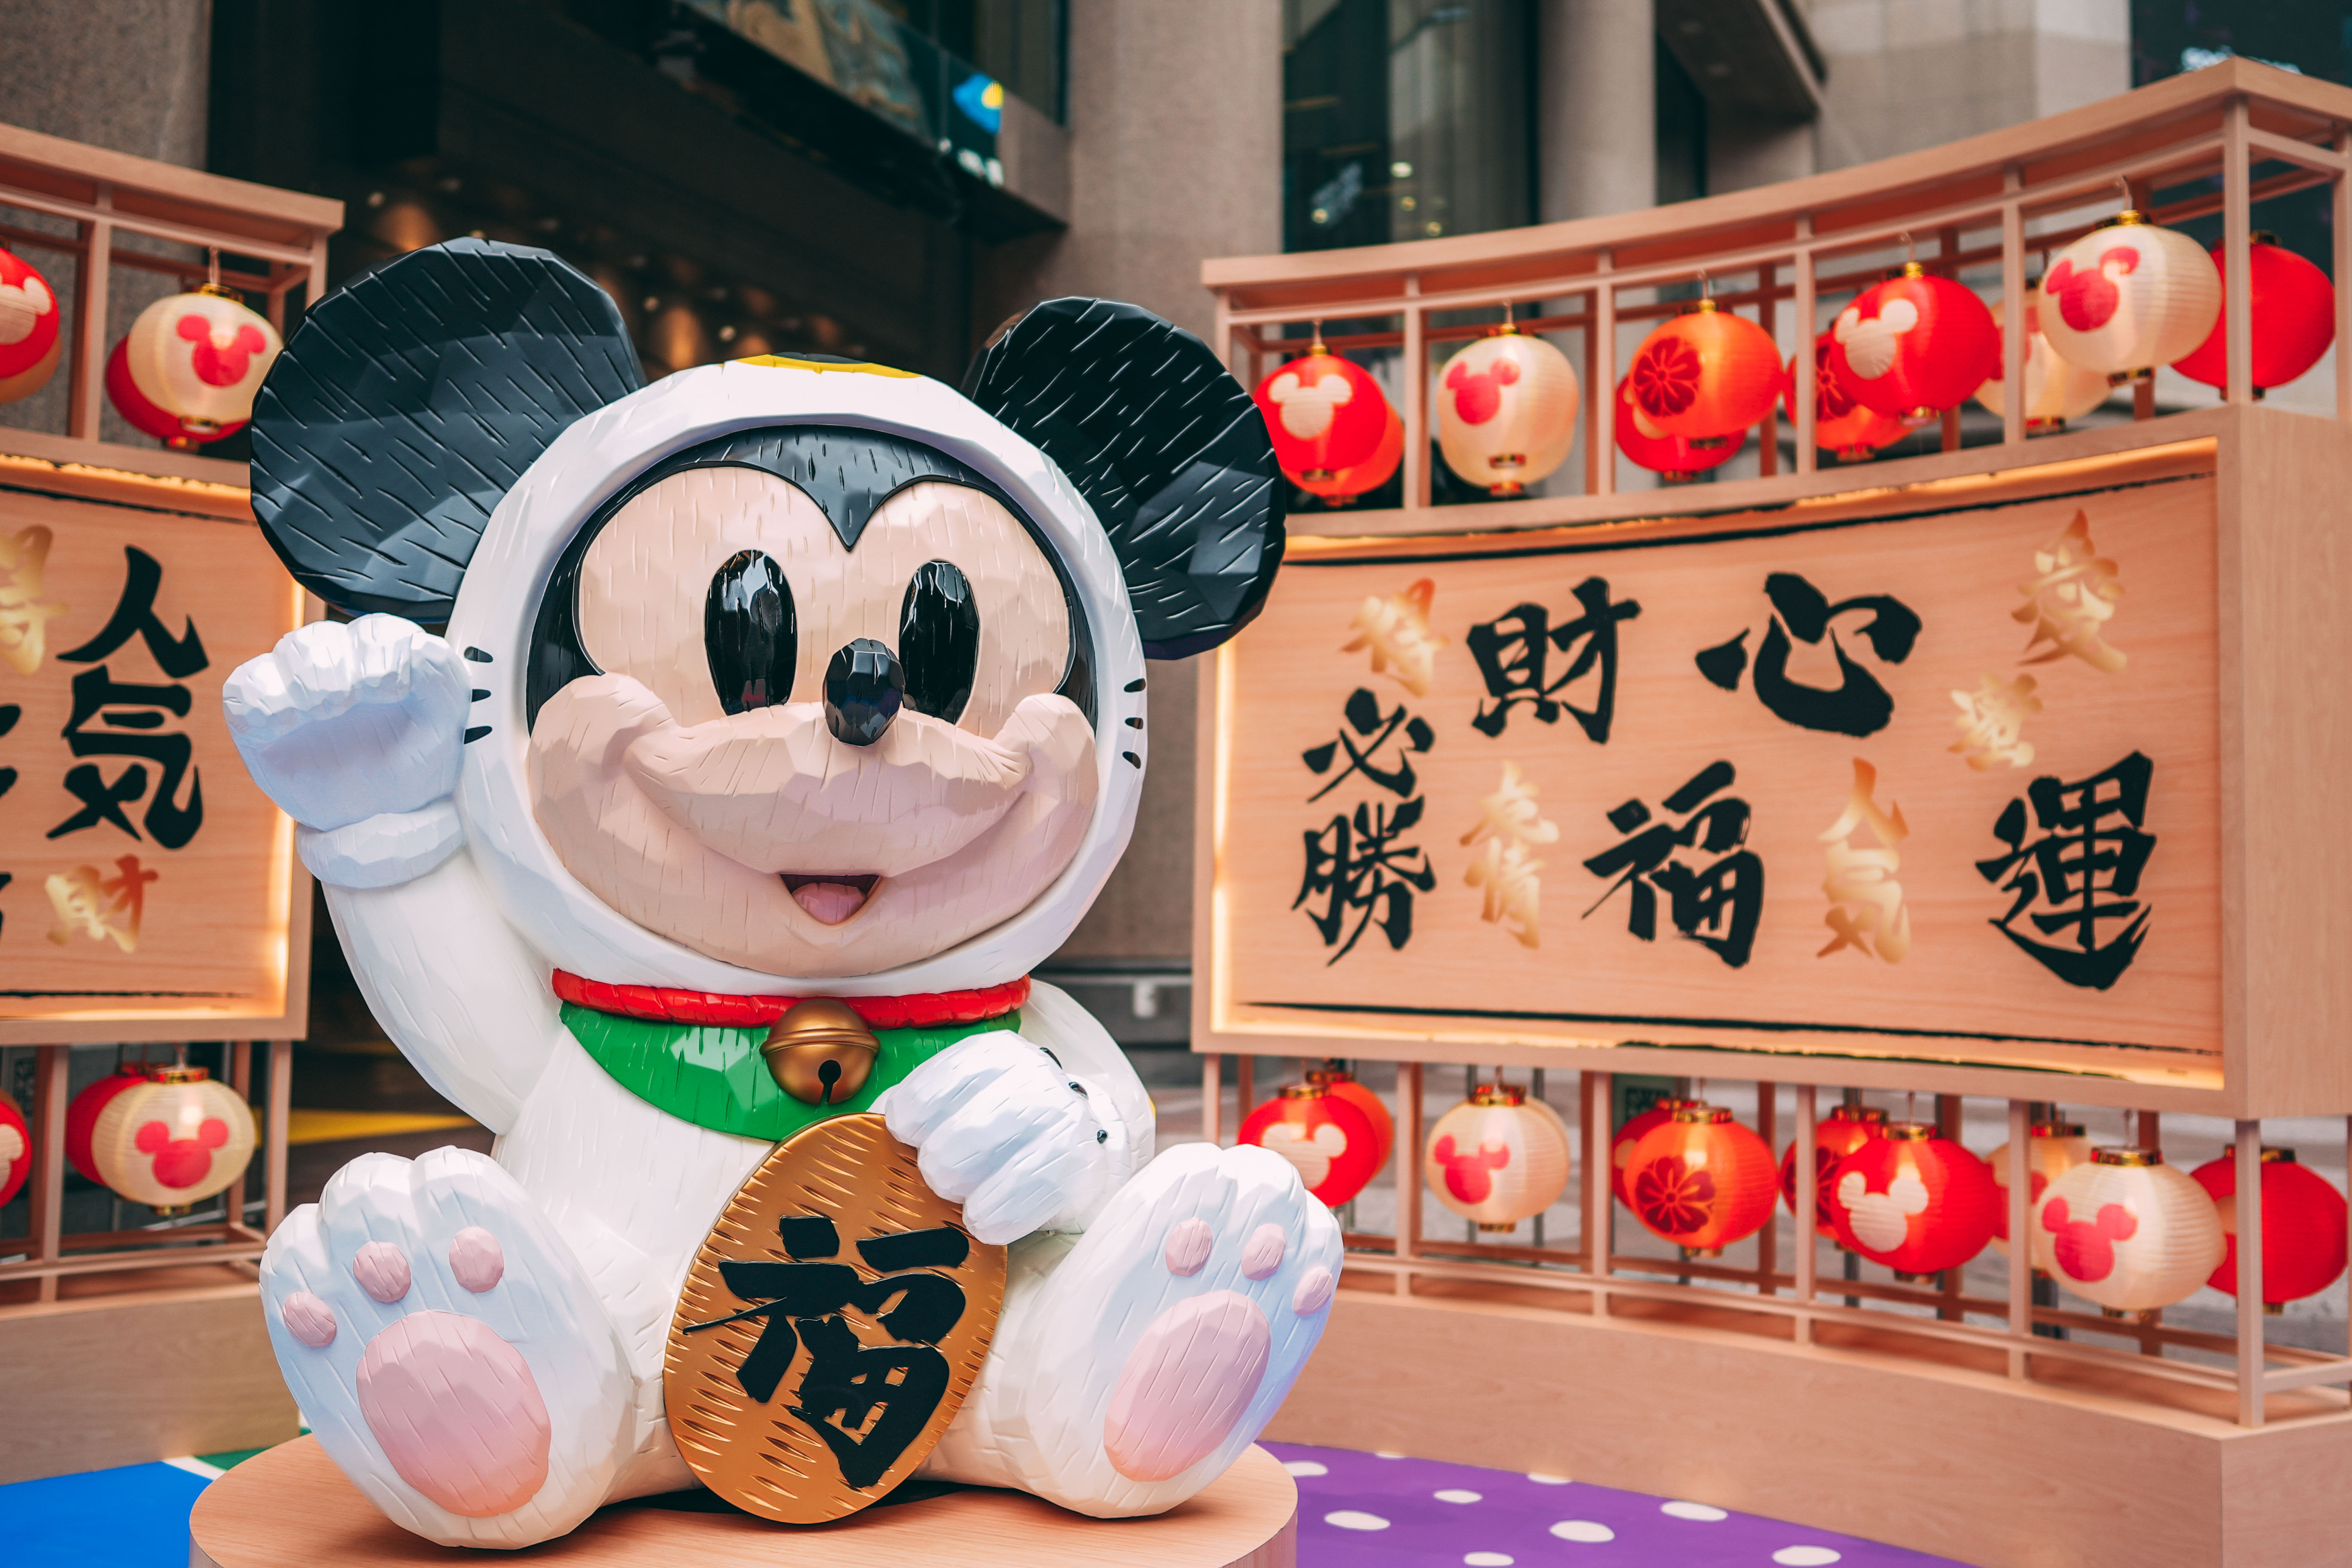 Mickey Mouse & Donald Duck「招福開運慶典」@ 時代廣場